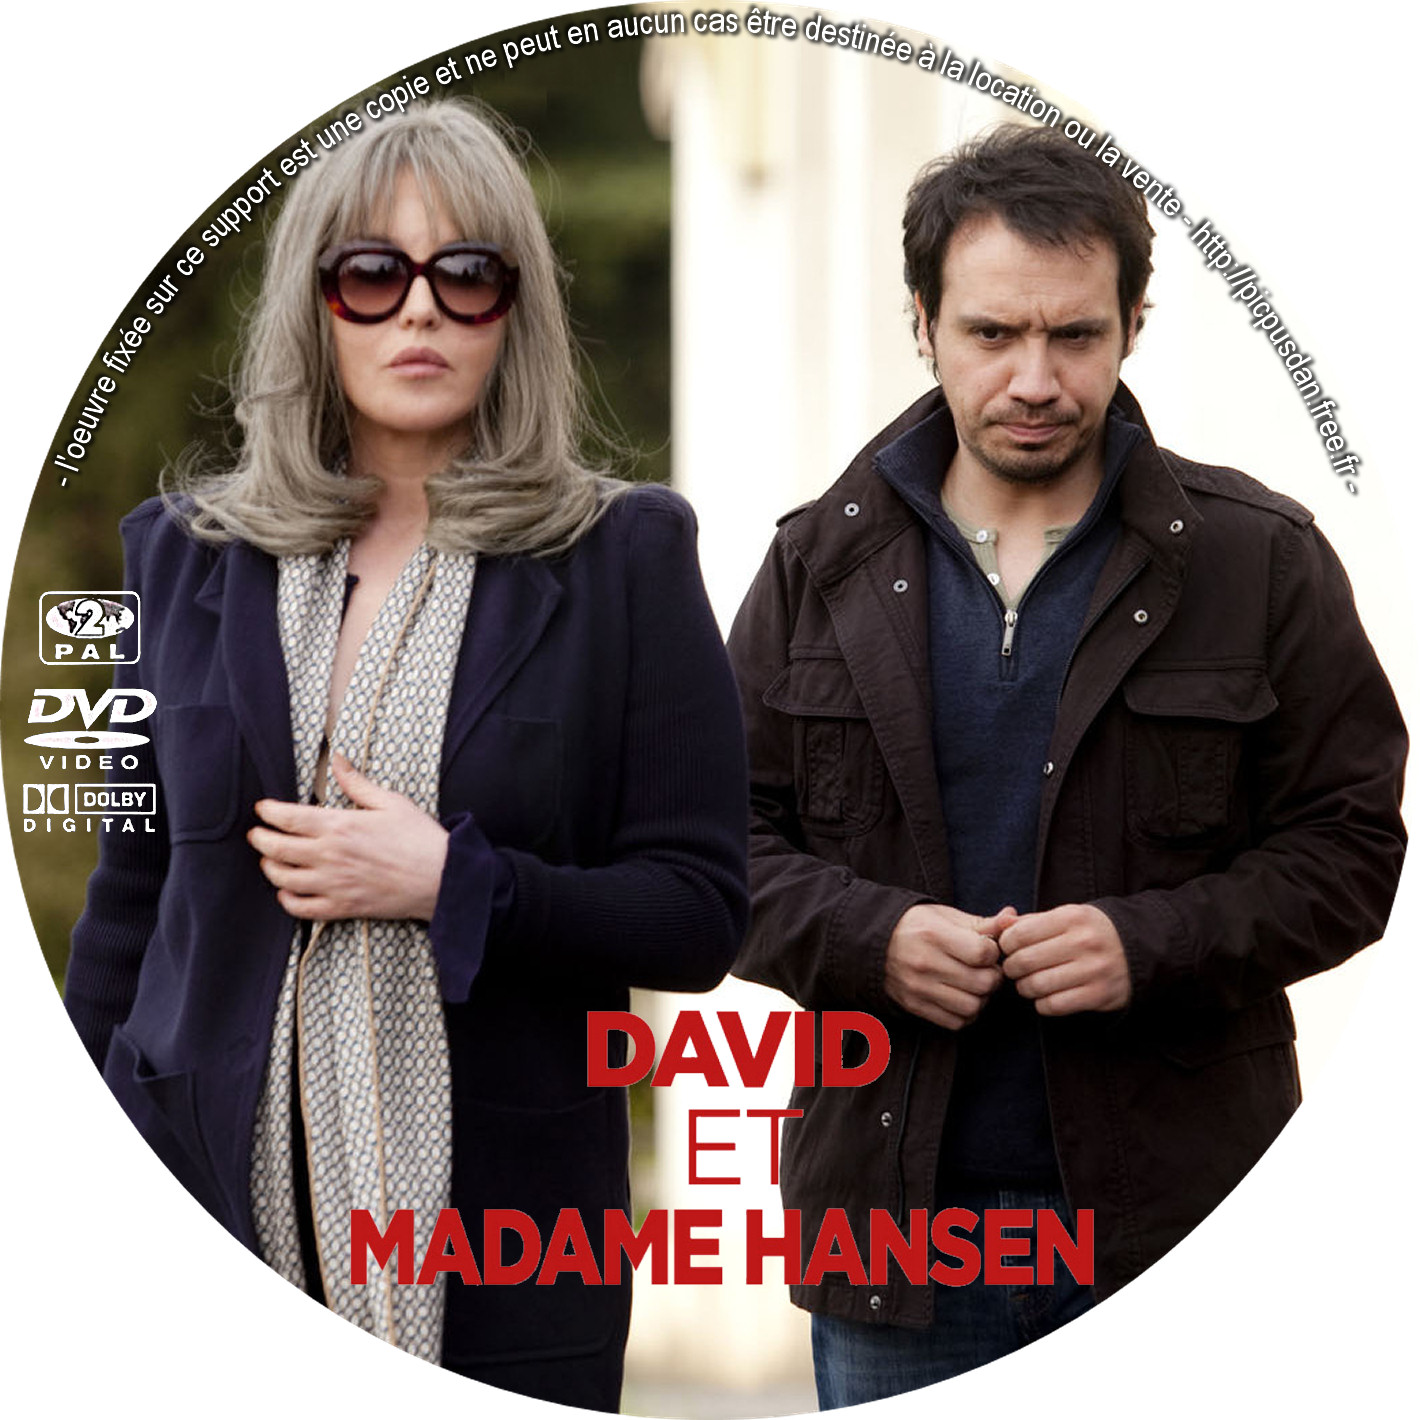 David et Madame Hansen custom